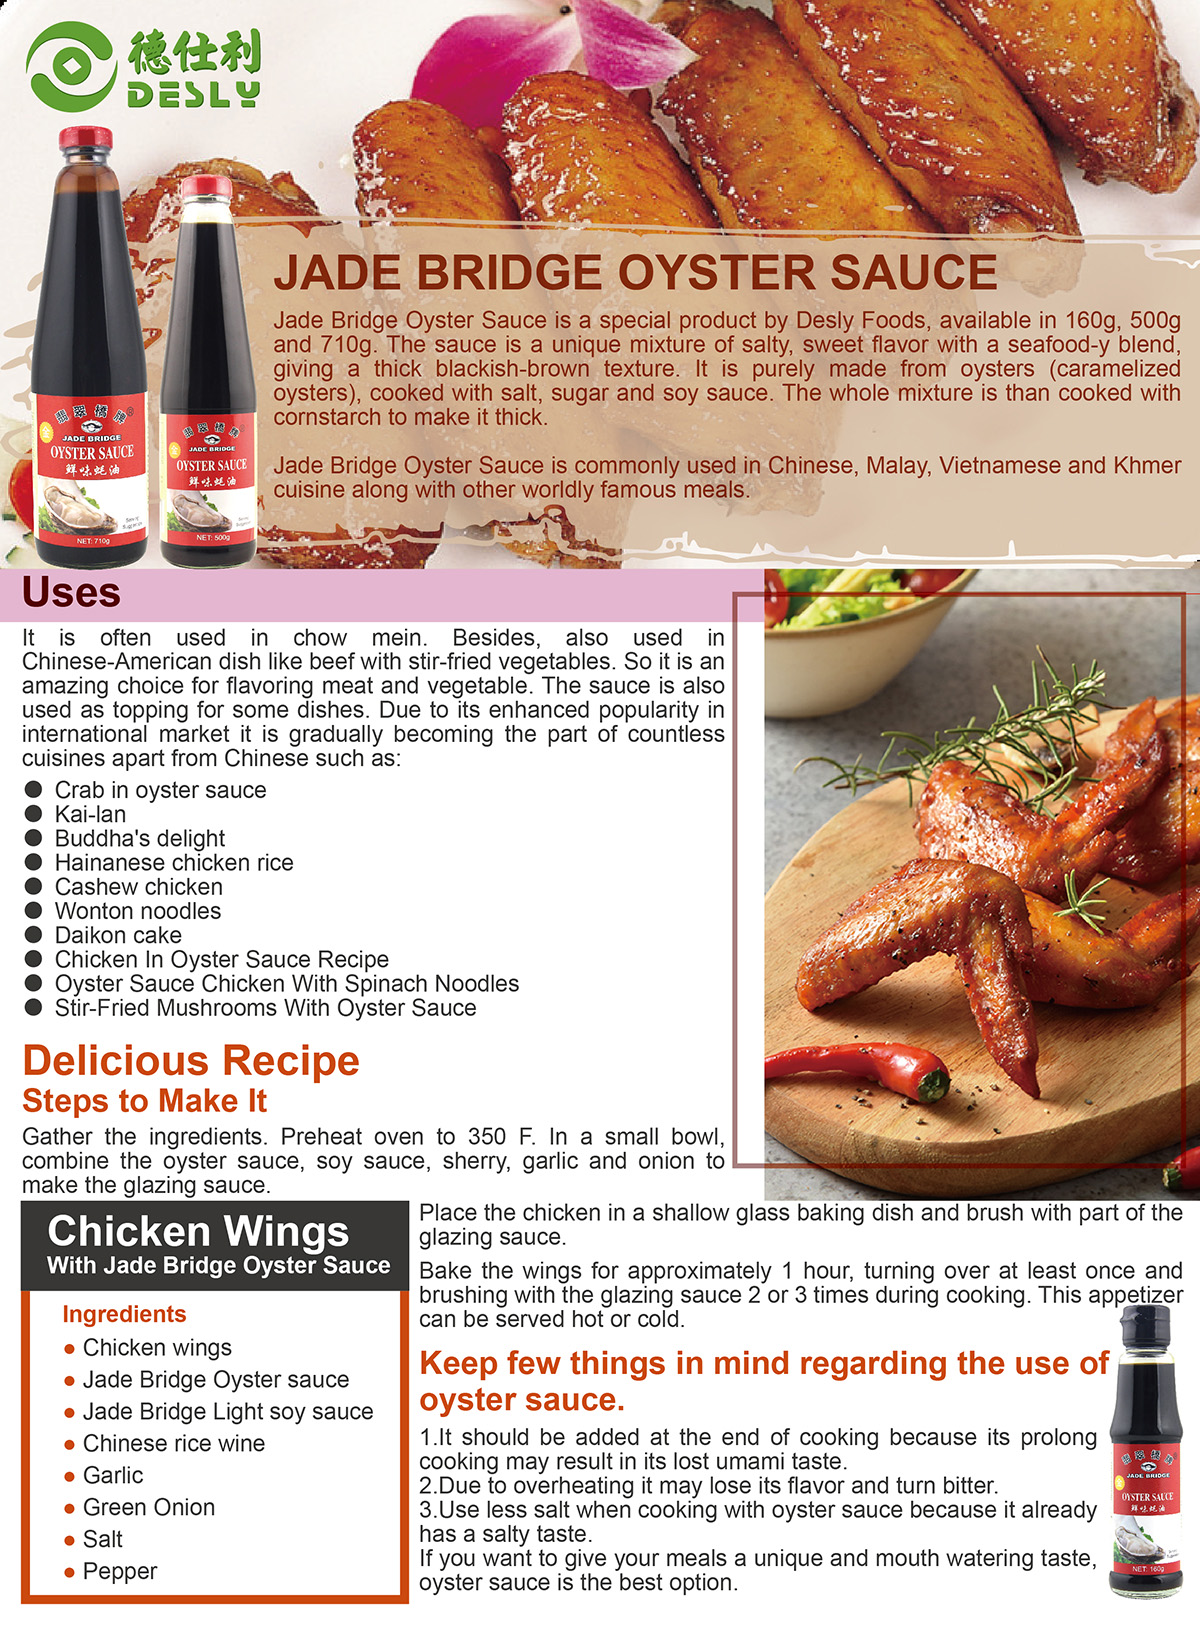 Chicken Wings With Jade Bridge Oyster Sauce.jpg